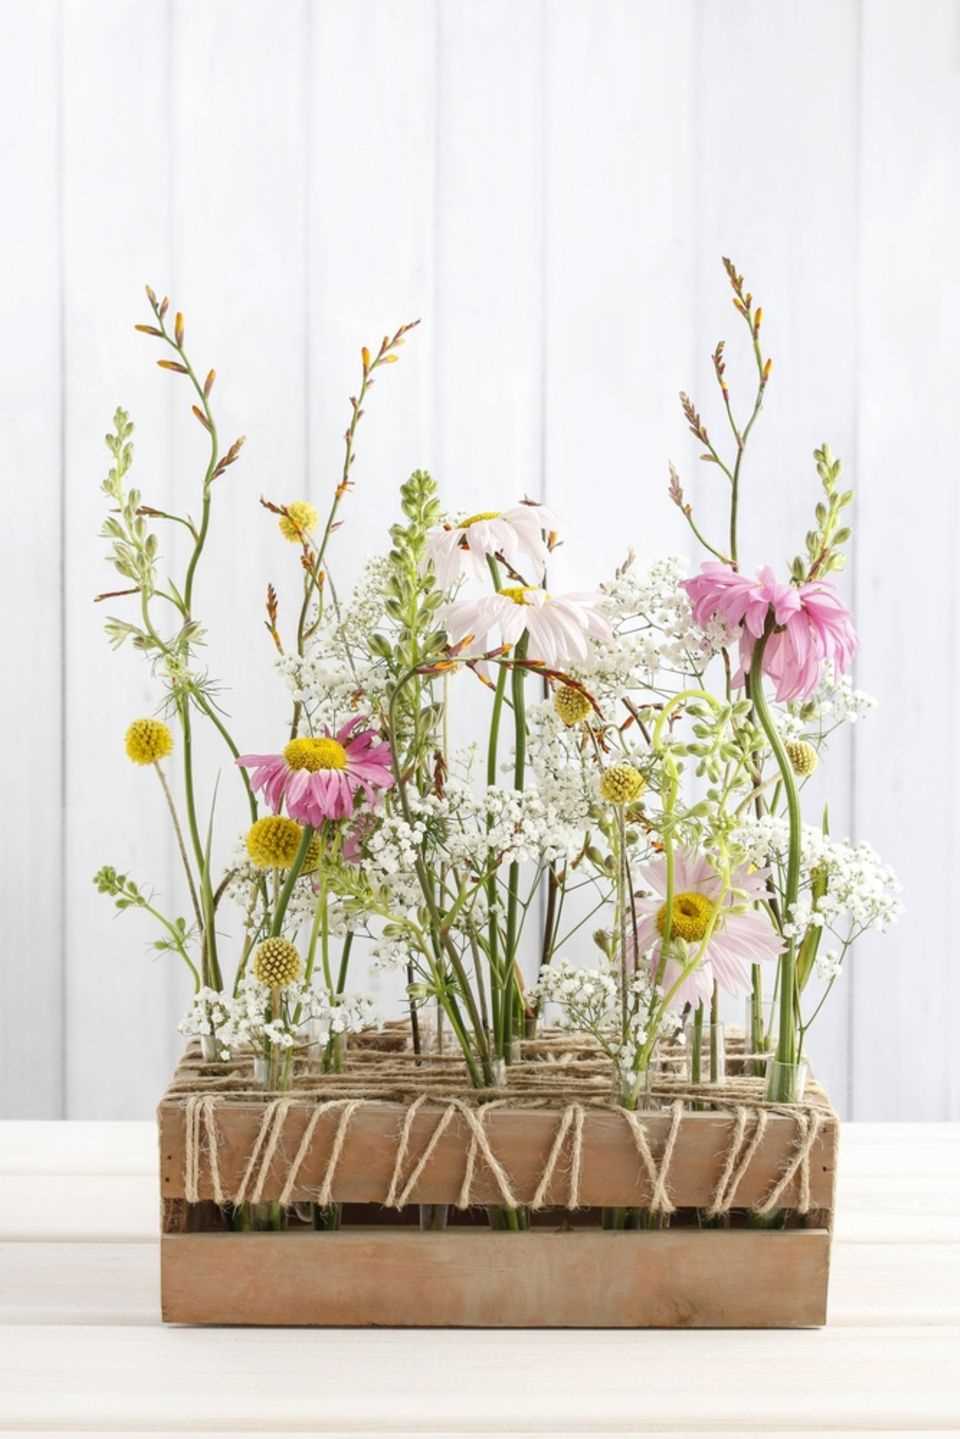 Make spring decorations: spring flowers